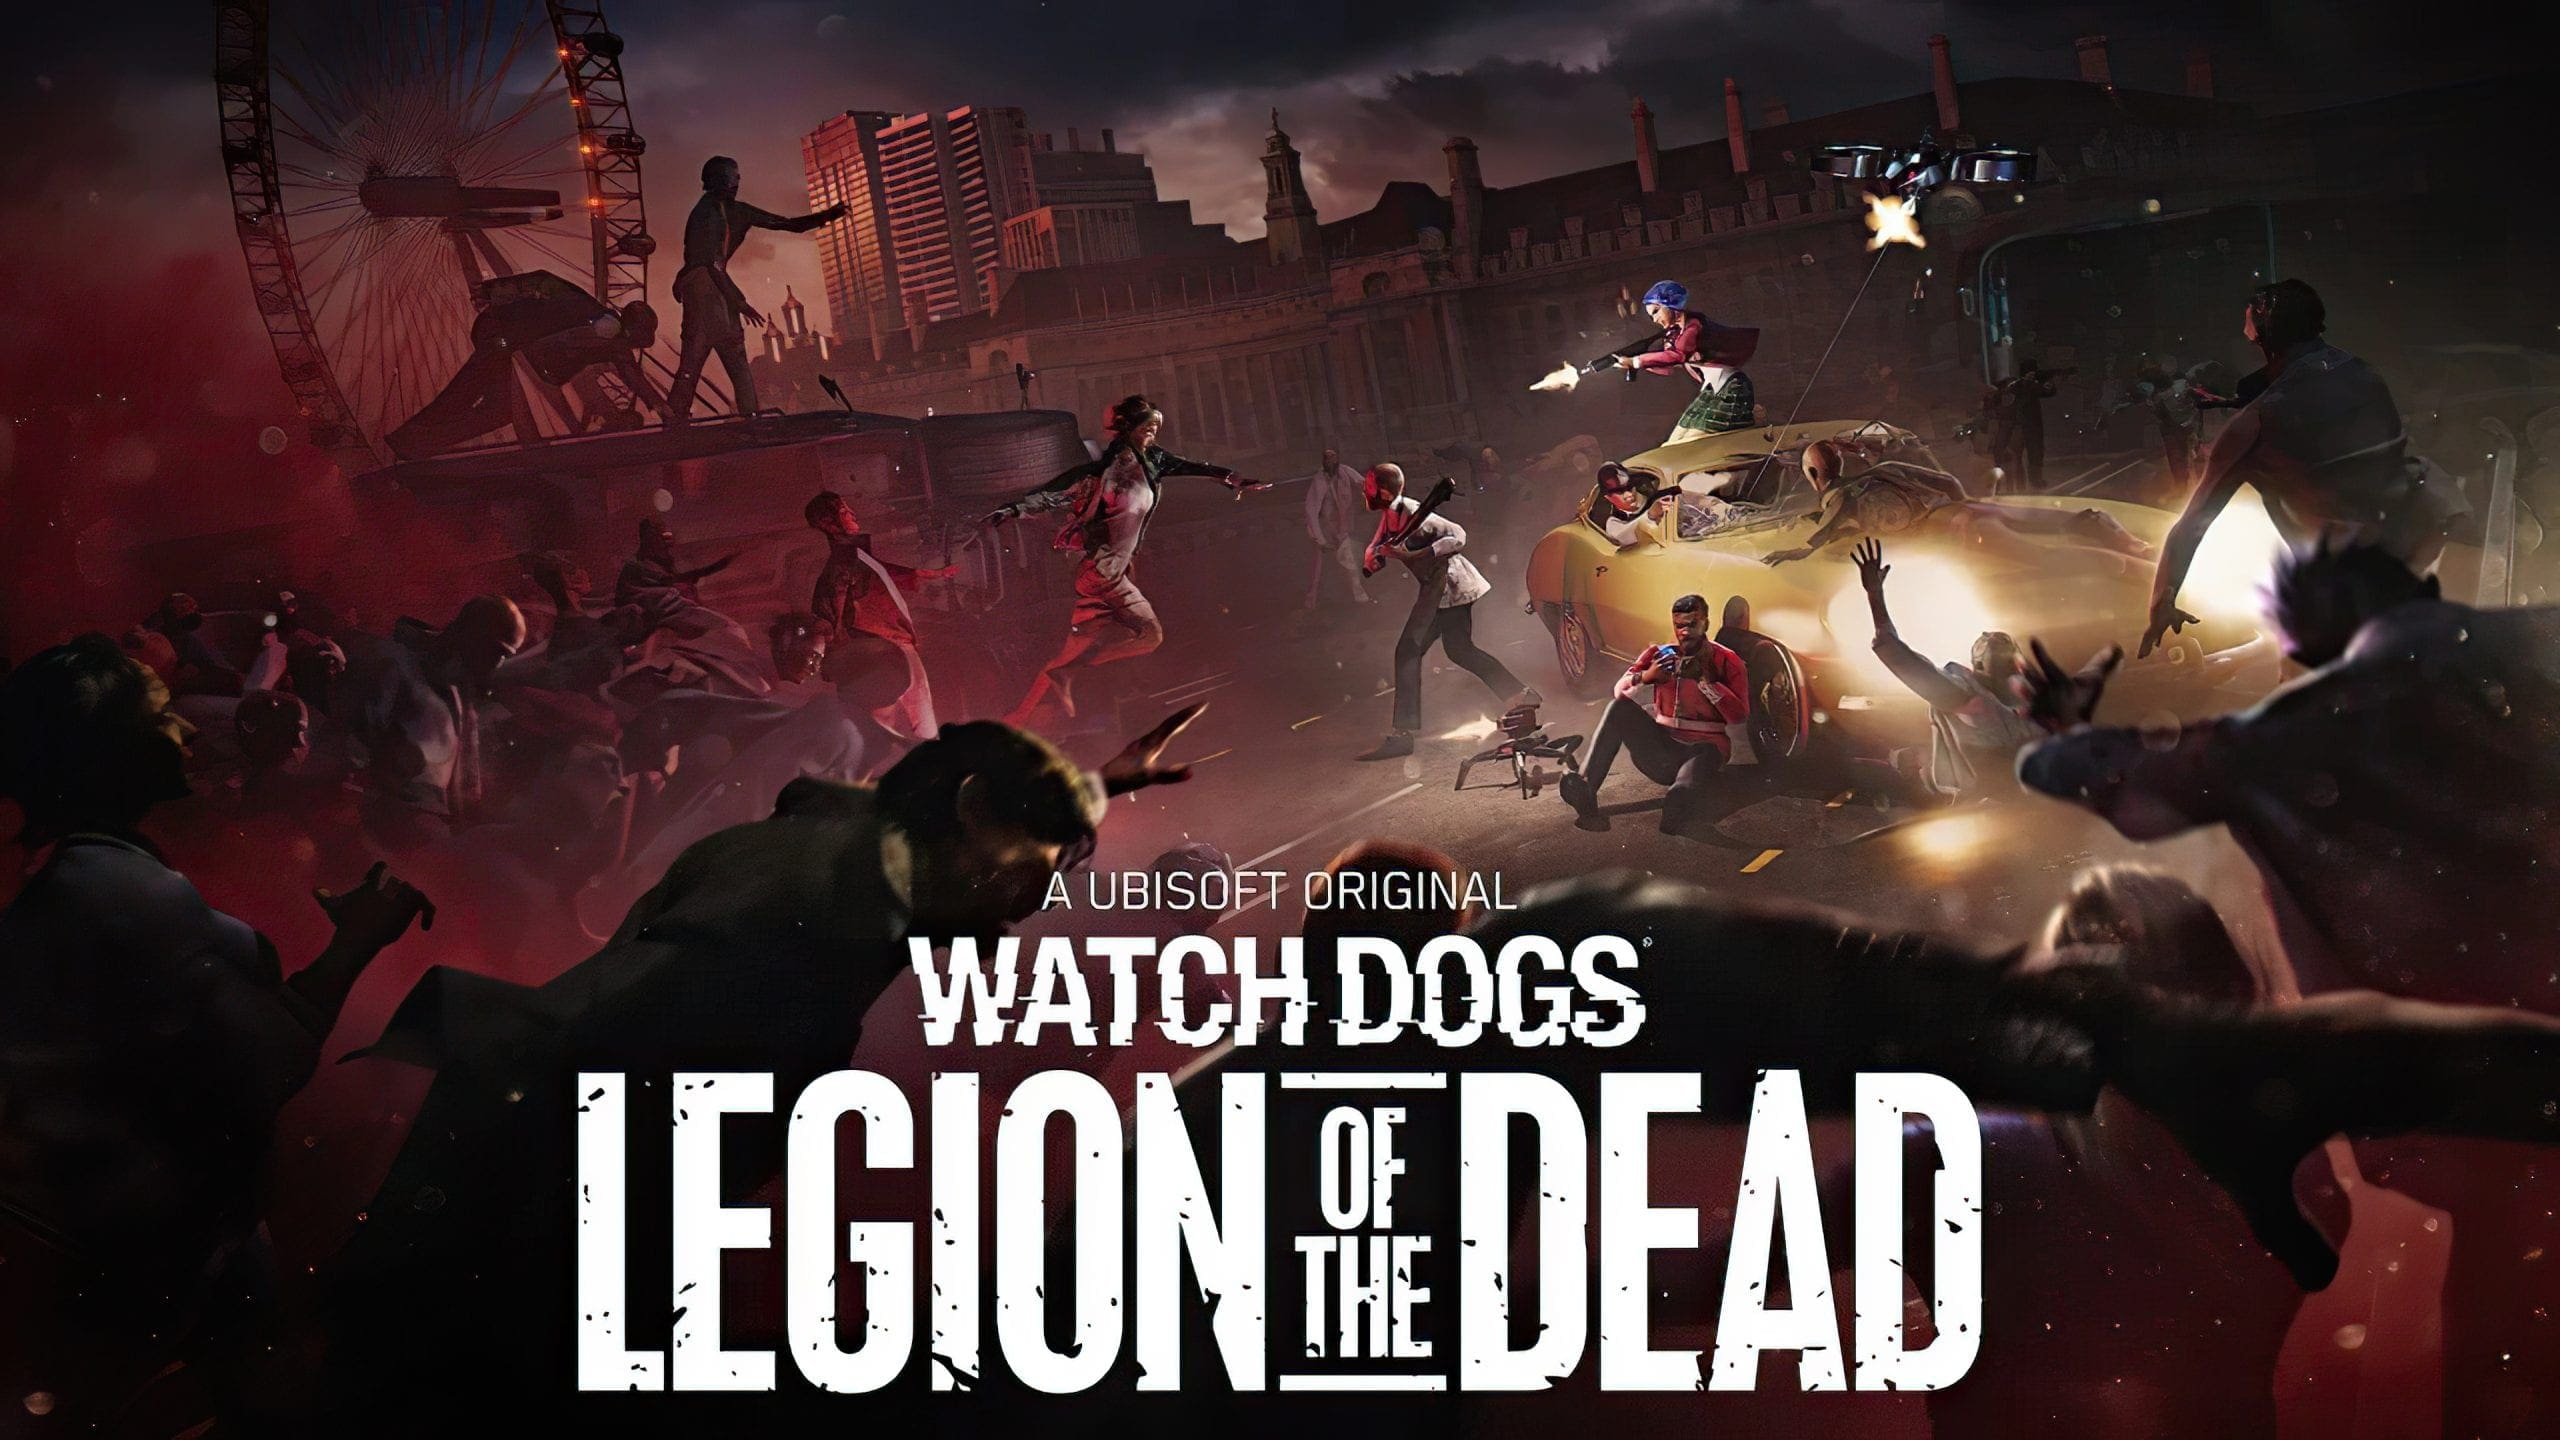 Watch Dogs: Legion of the Dead Principal